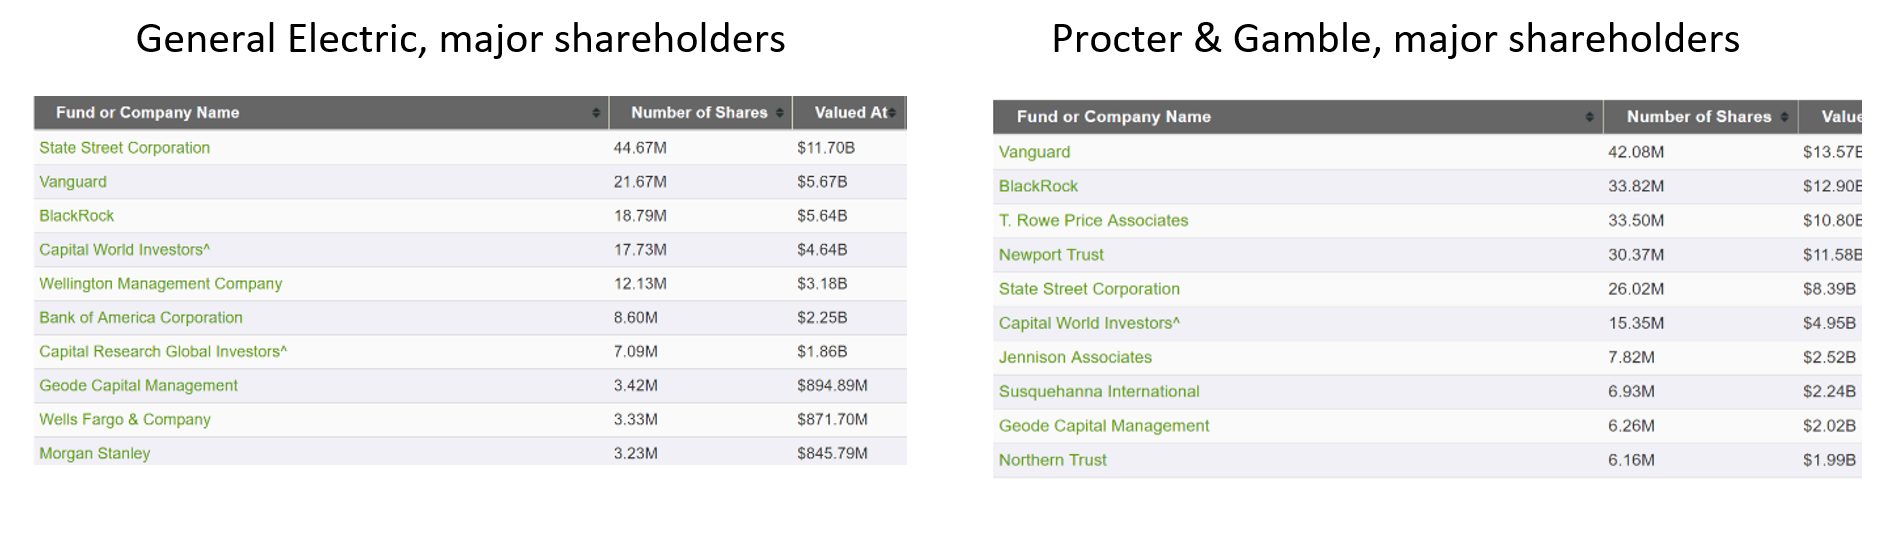 General Electric shareholders, P&G shareholders